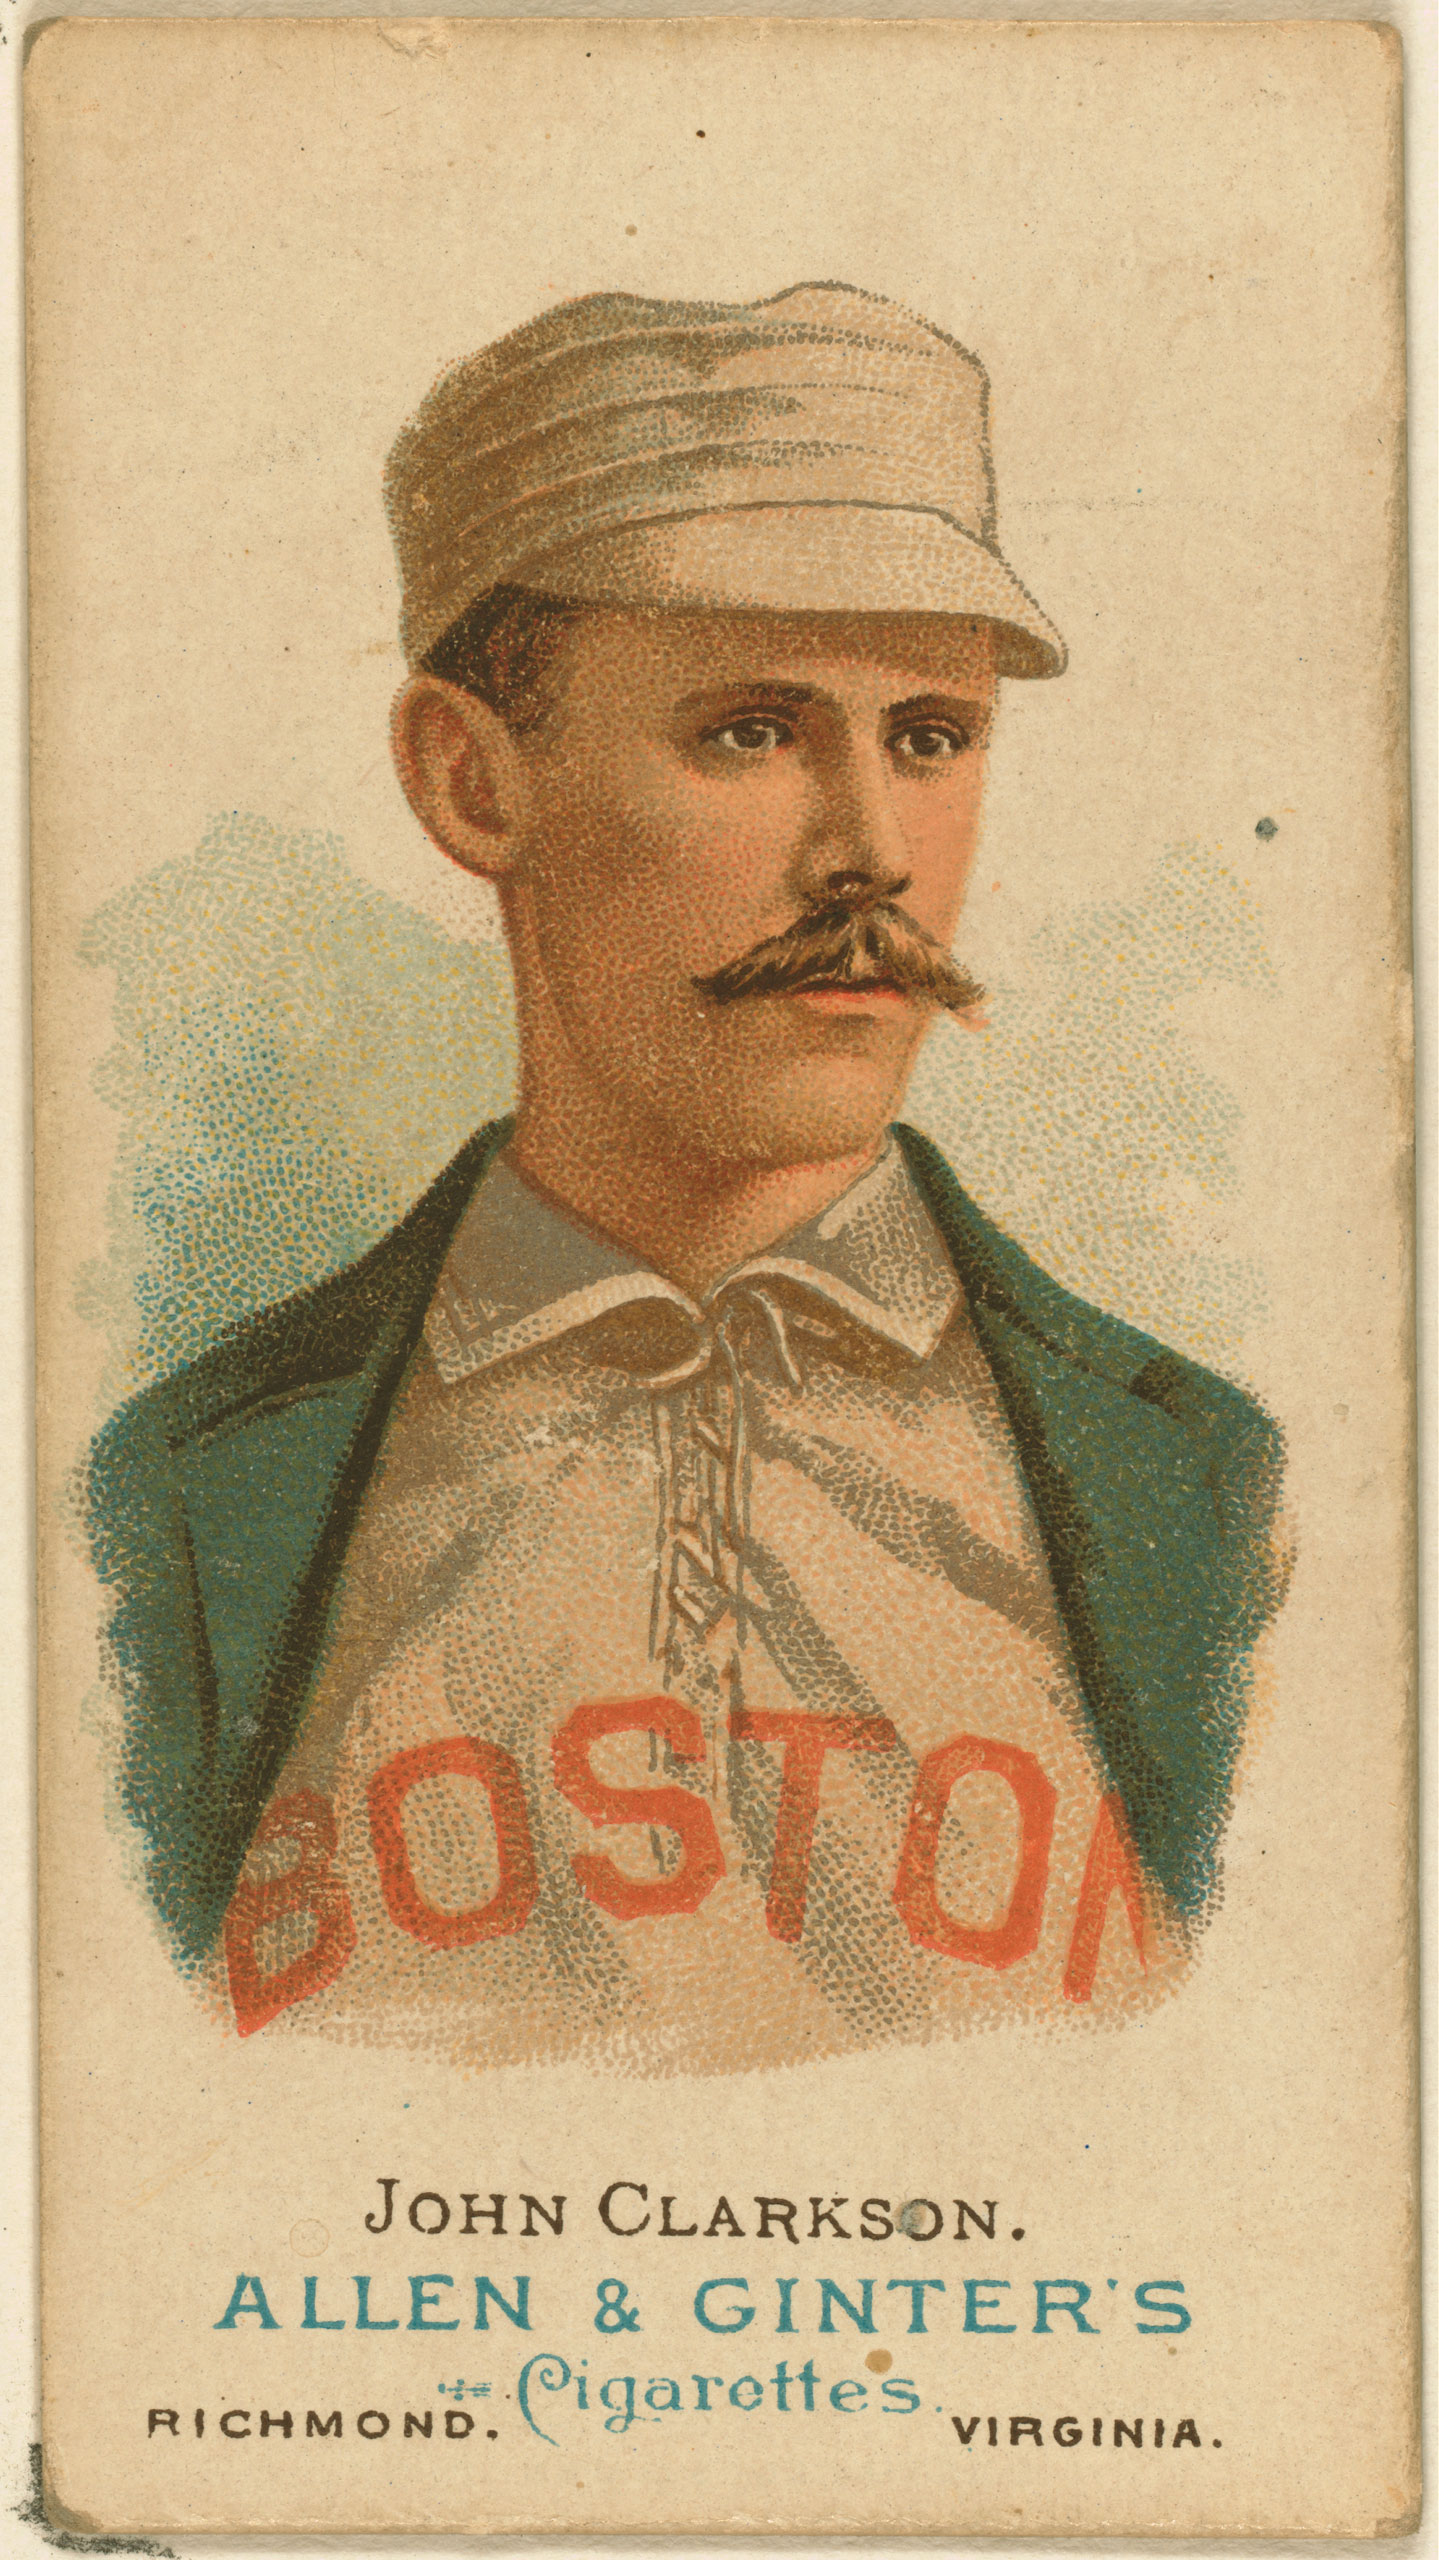 John Clarkson, Boston Beaneaters, baseball card, 1887.